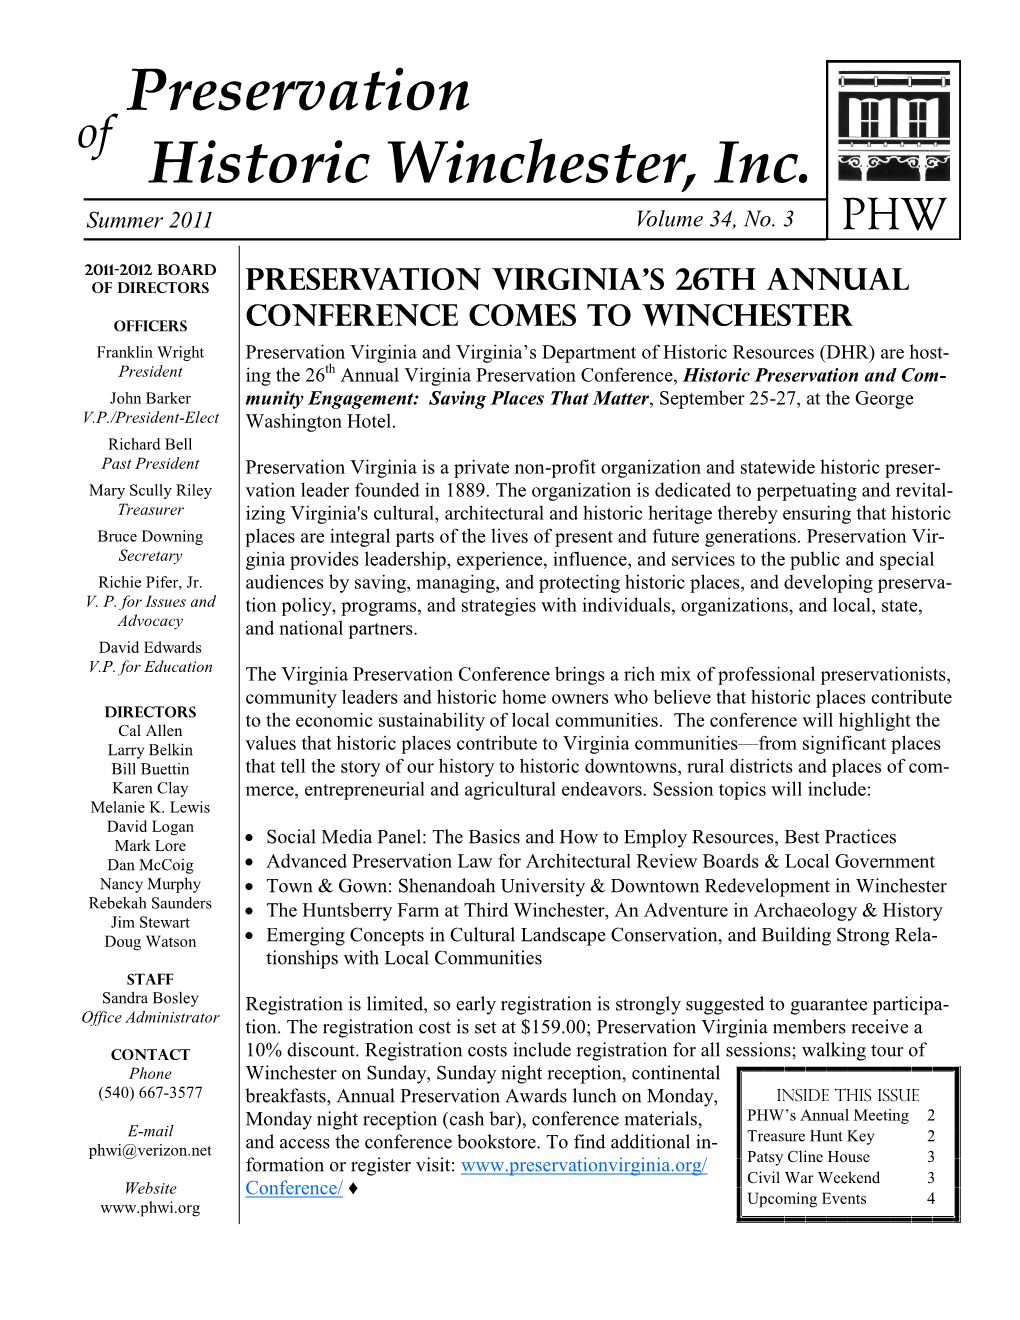 Historic Winchester, Inc. Preservation